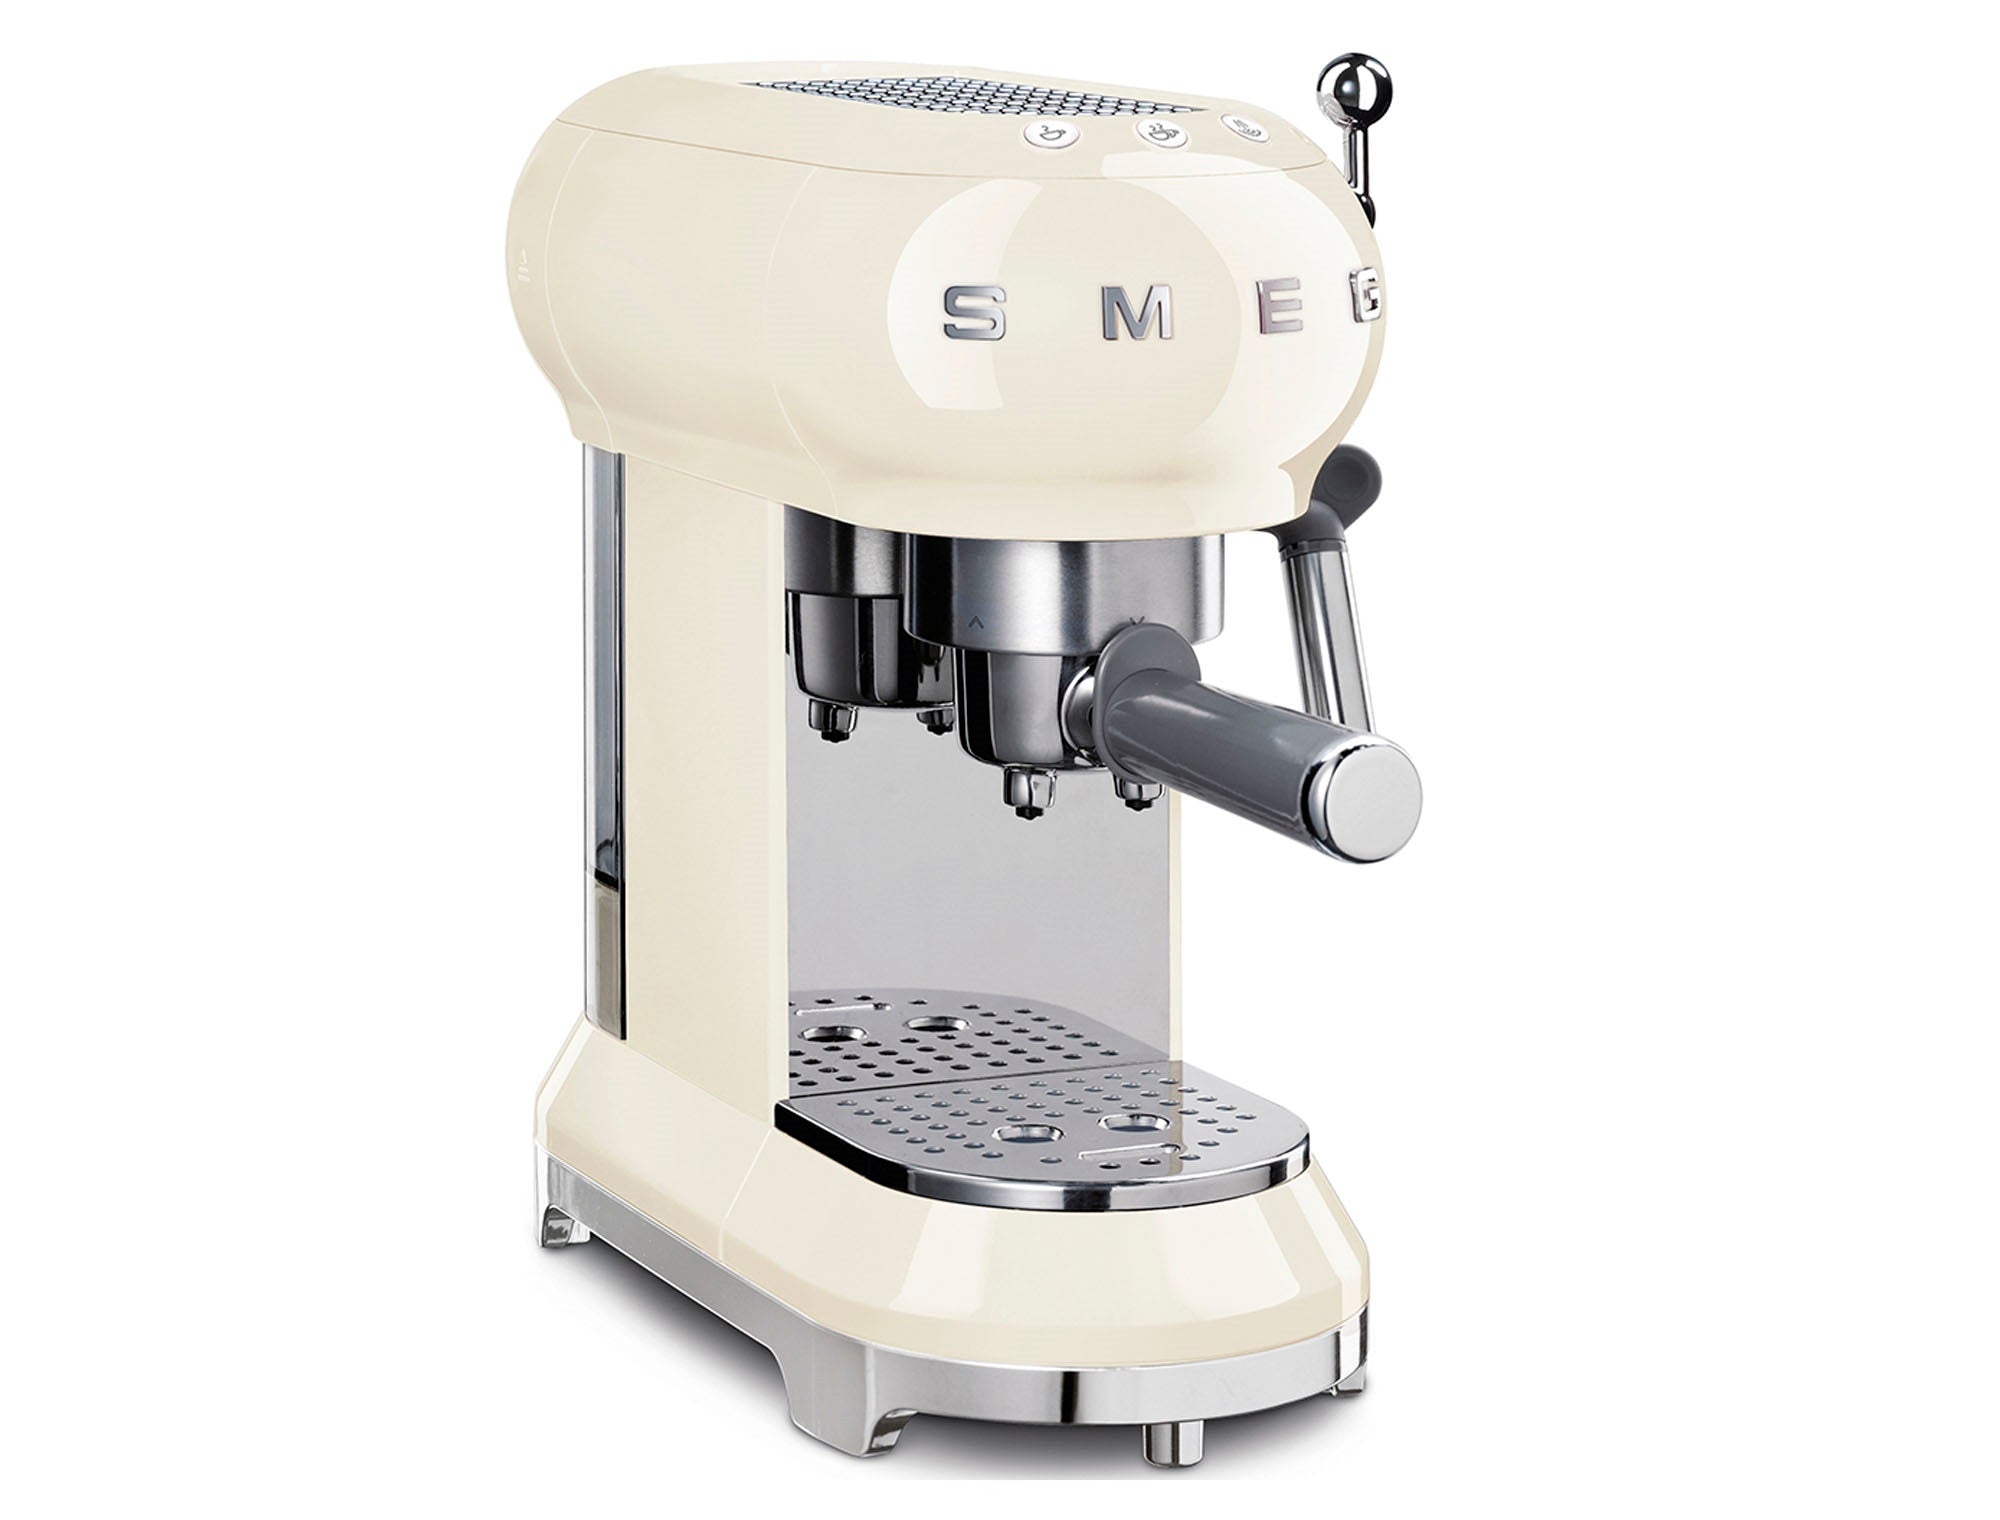 Smeg Manual espresso coffee machine 50's Style Aesthetic